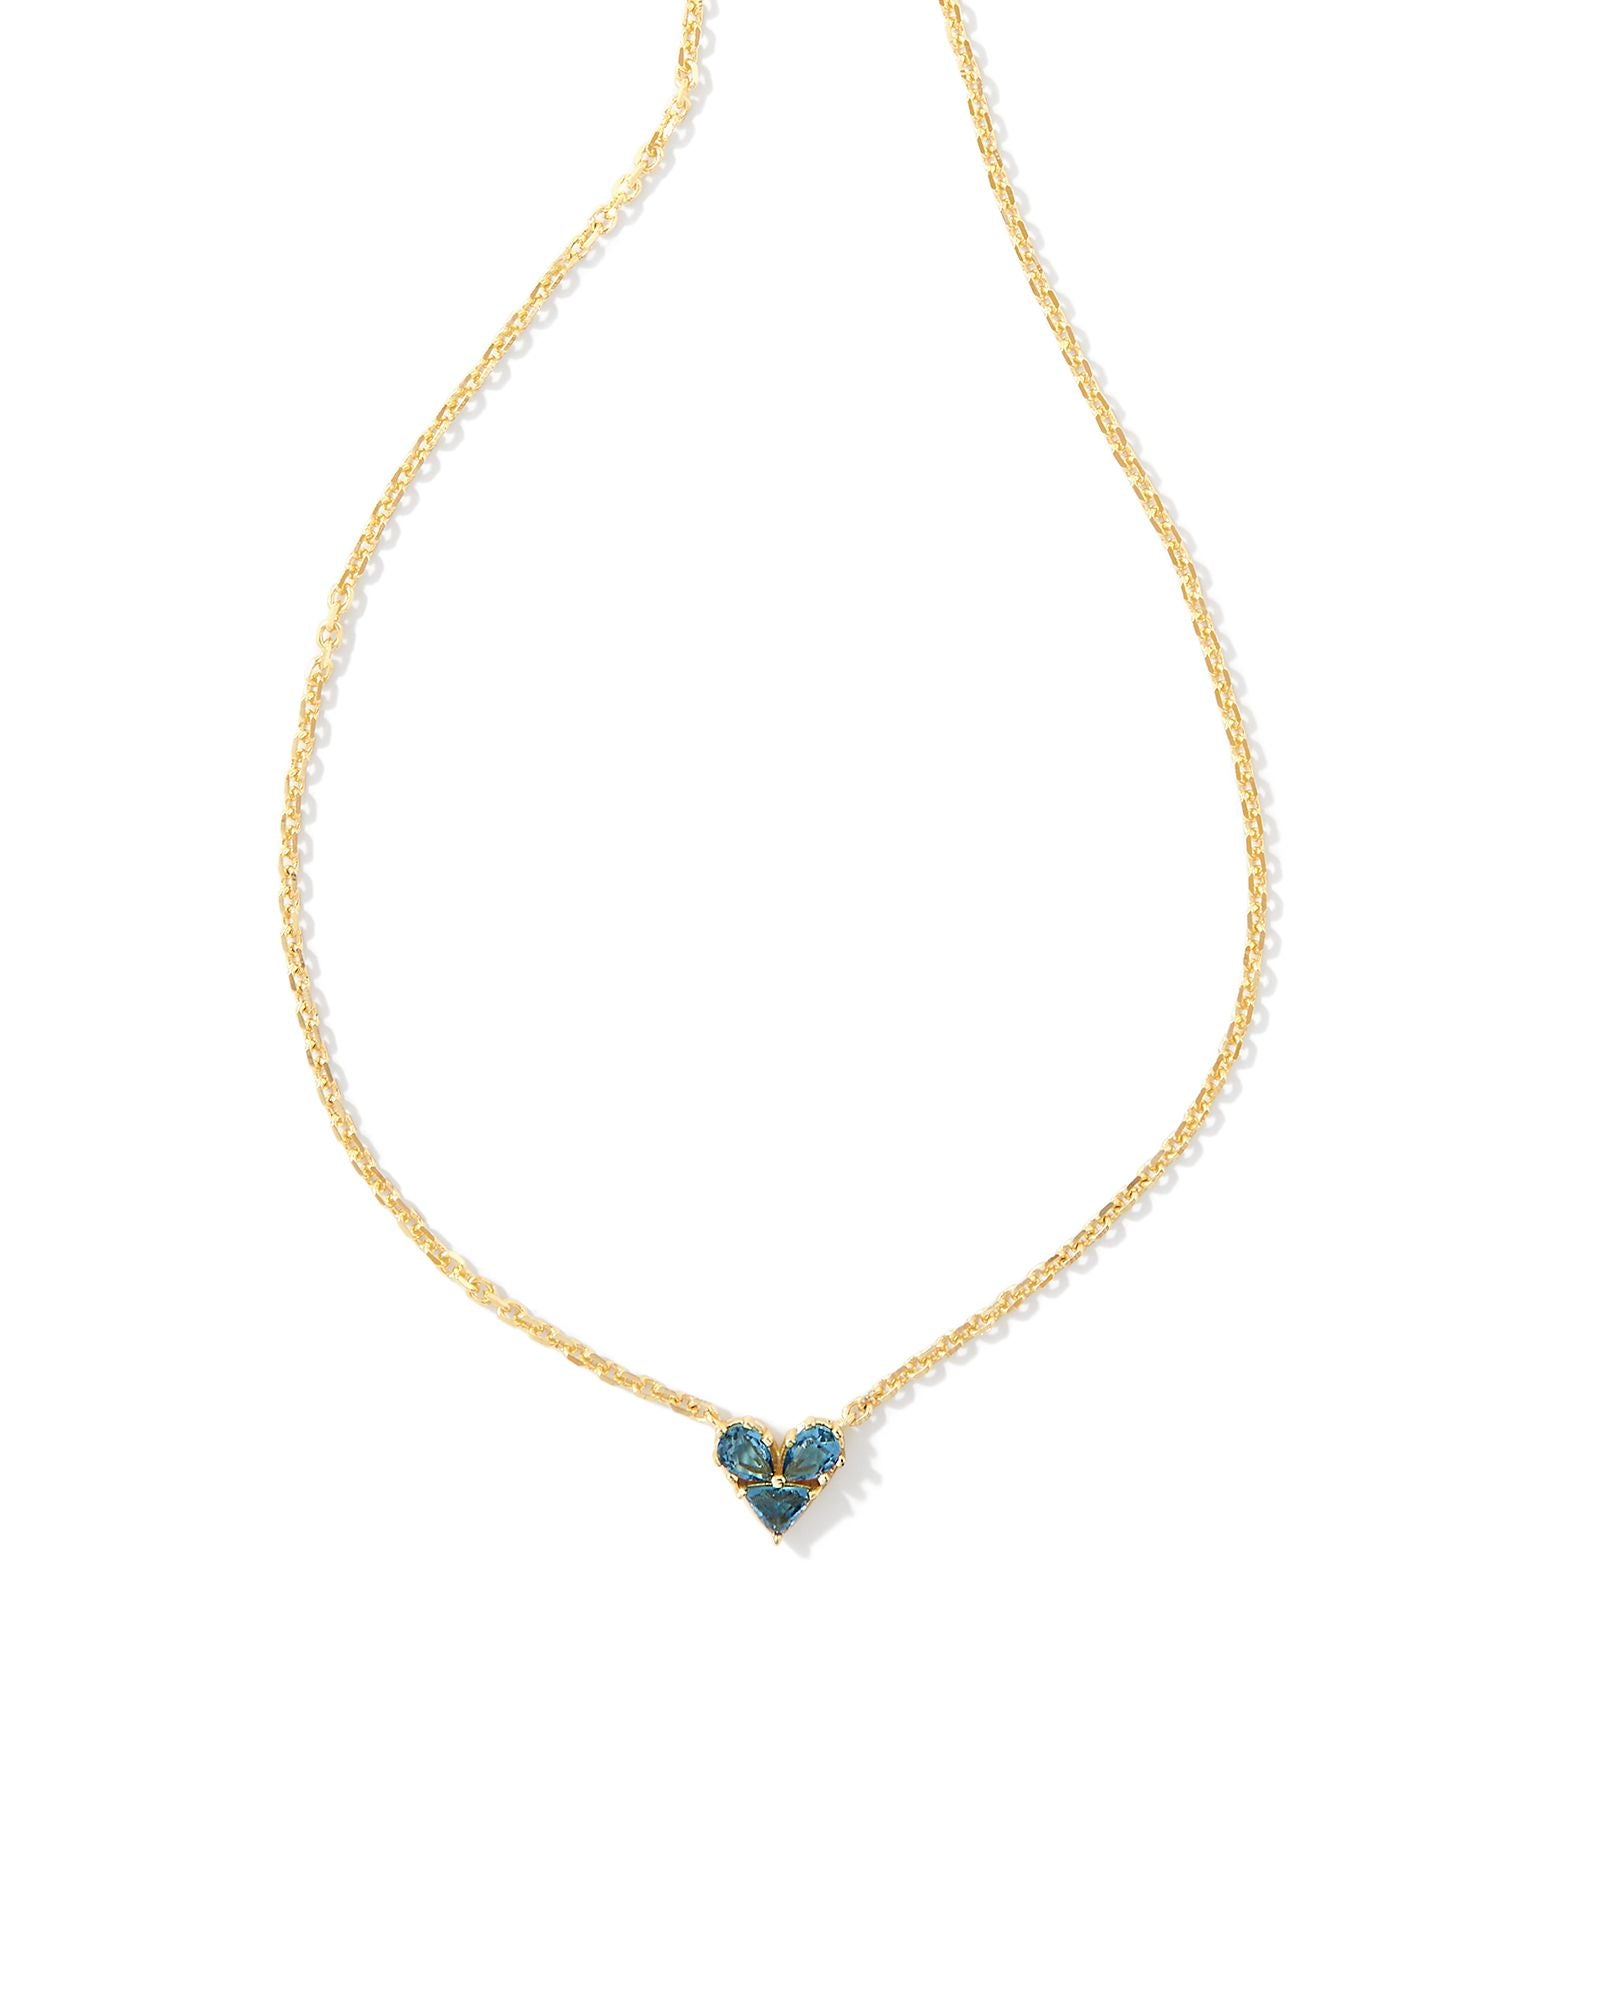 Katy Gold Heart Pendant Necklace - Brazos Avenue Market 